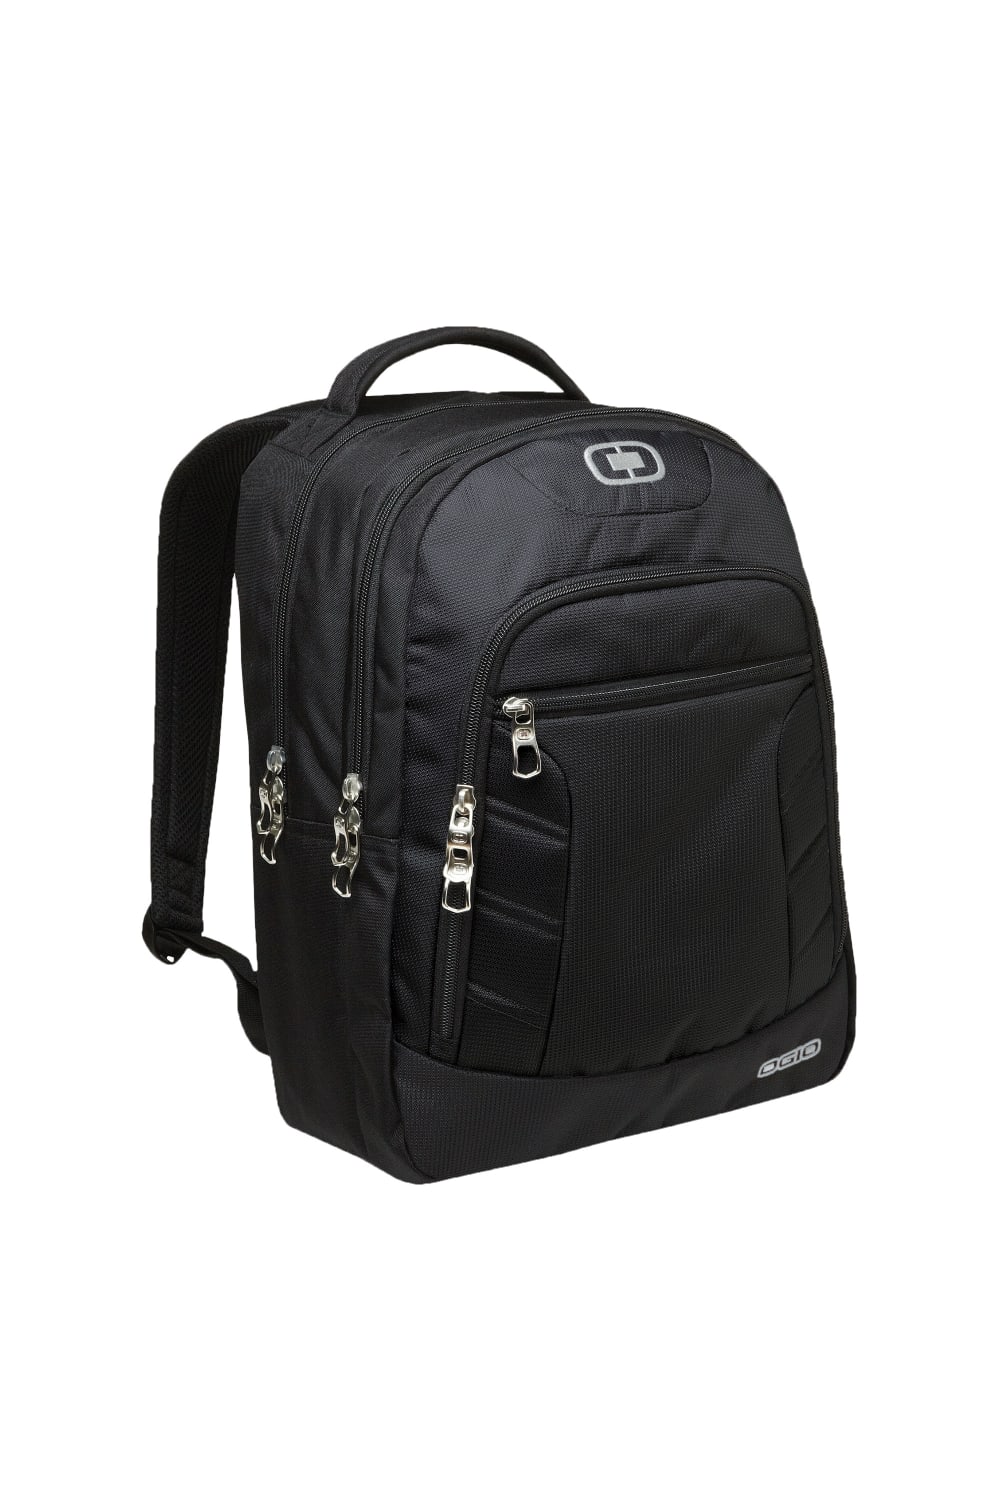 Ogio Multipurpose Colton Back Pack / Rucksack / Bag (24.6 Litres) (Pack of 2) (Black/ Silver) (One Size)